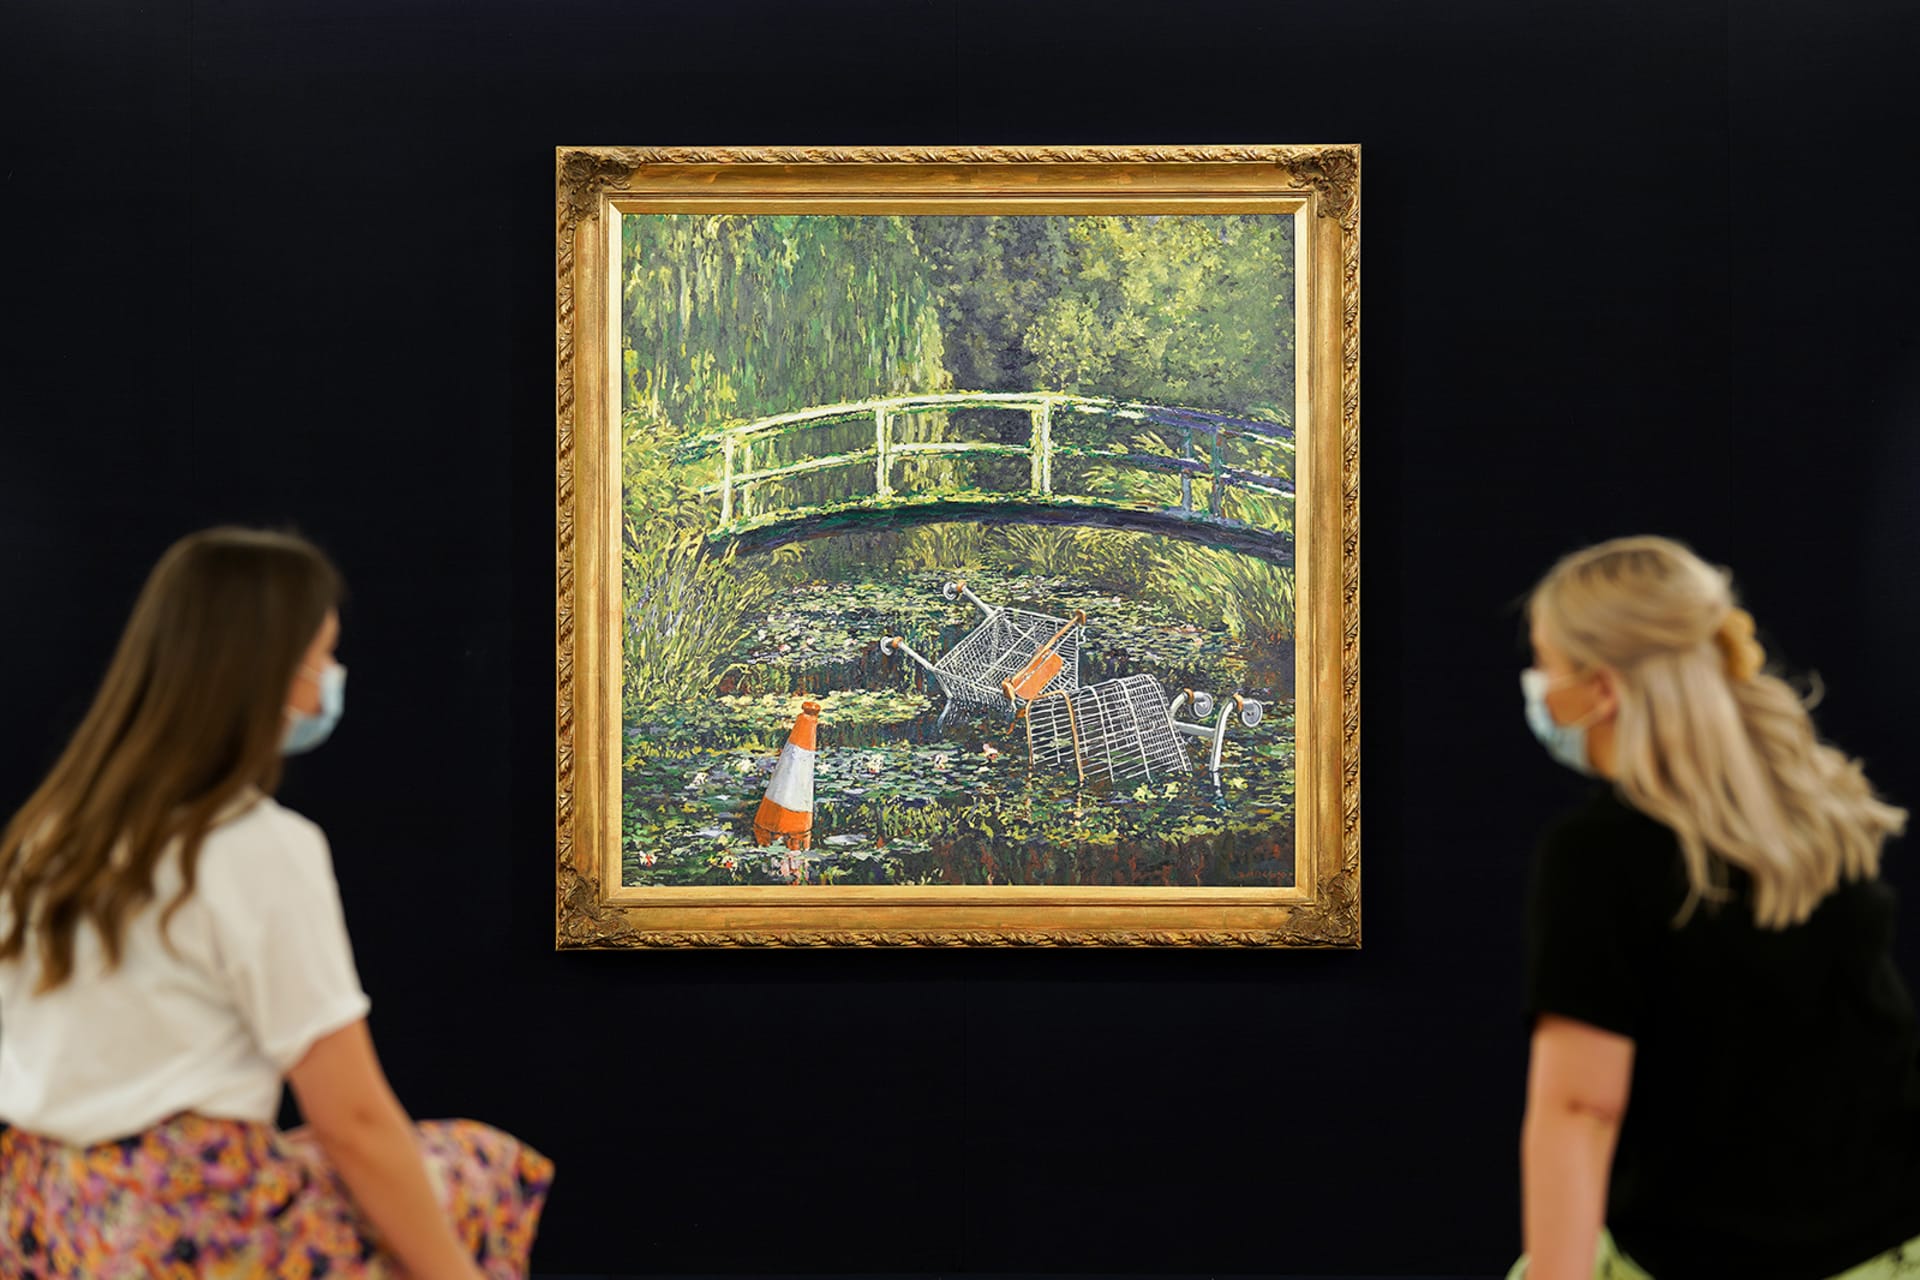 Obraz s názvem Show me the Monet (Ukaž mi Moneta) vytvořil streetartový umělec Banksy.